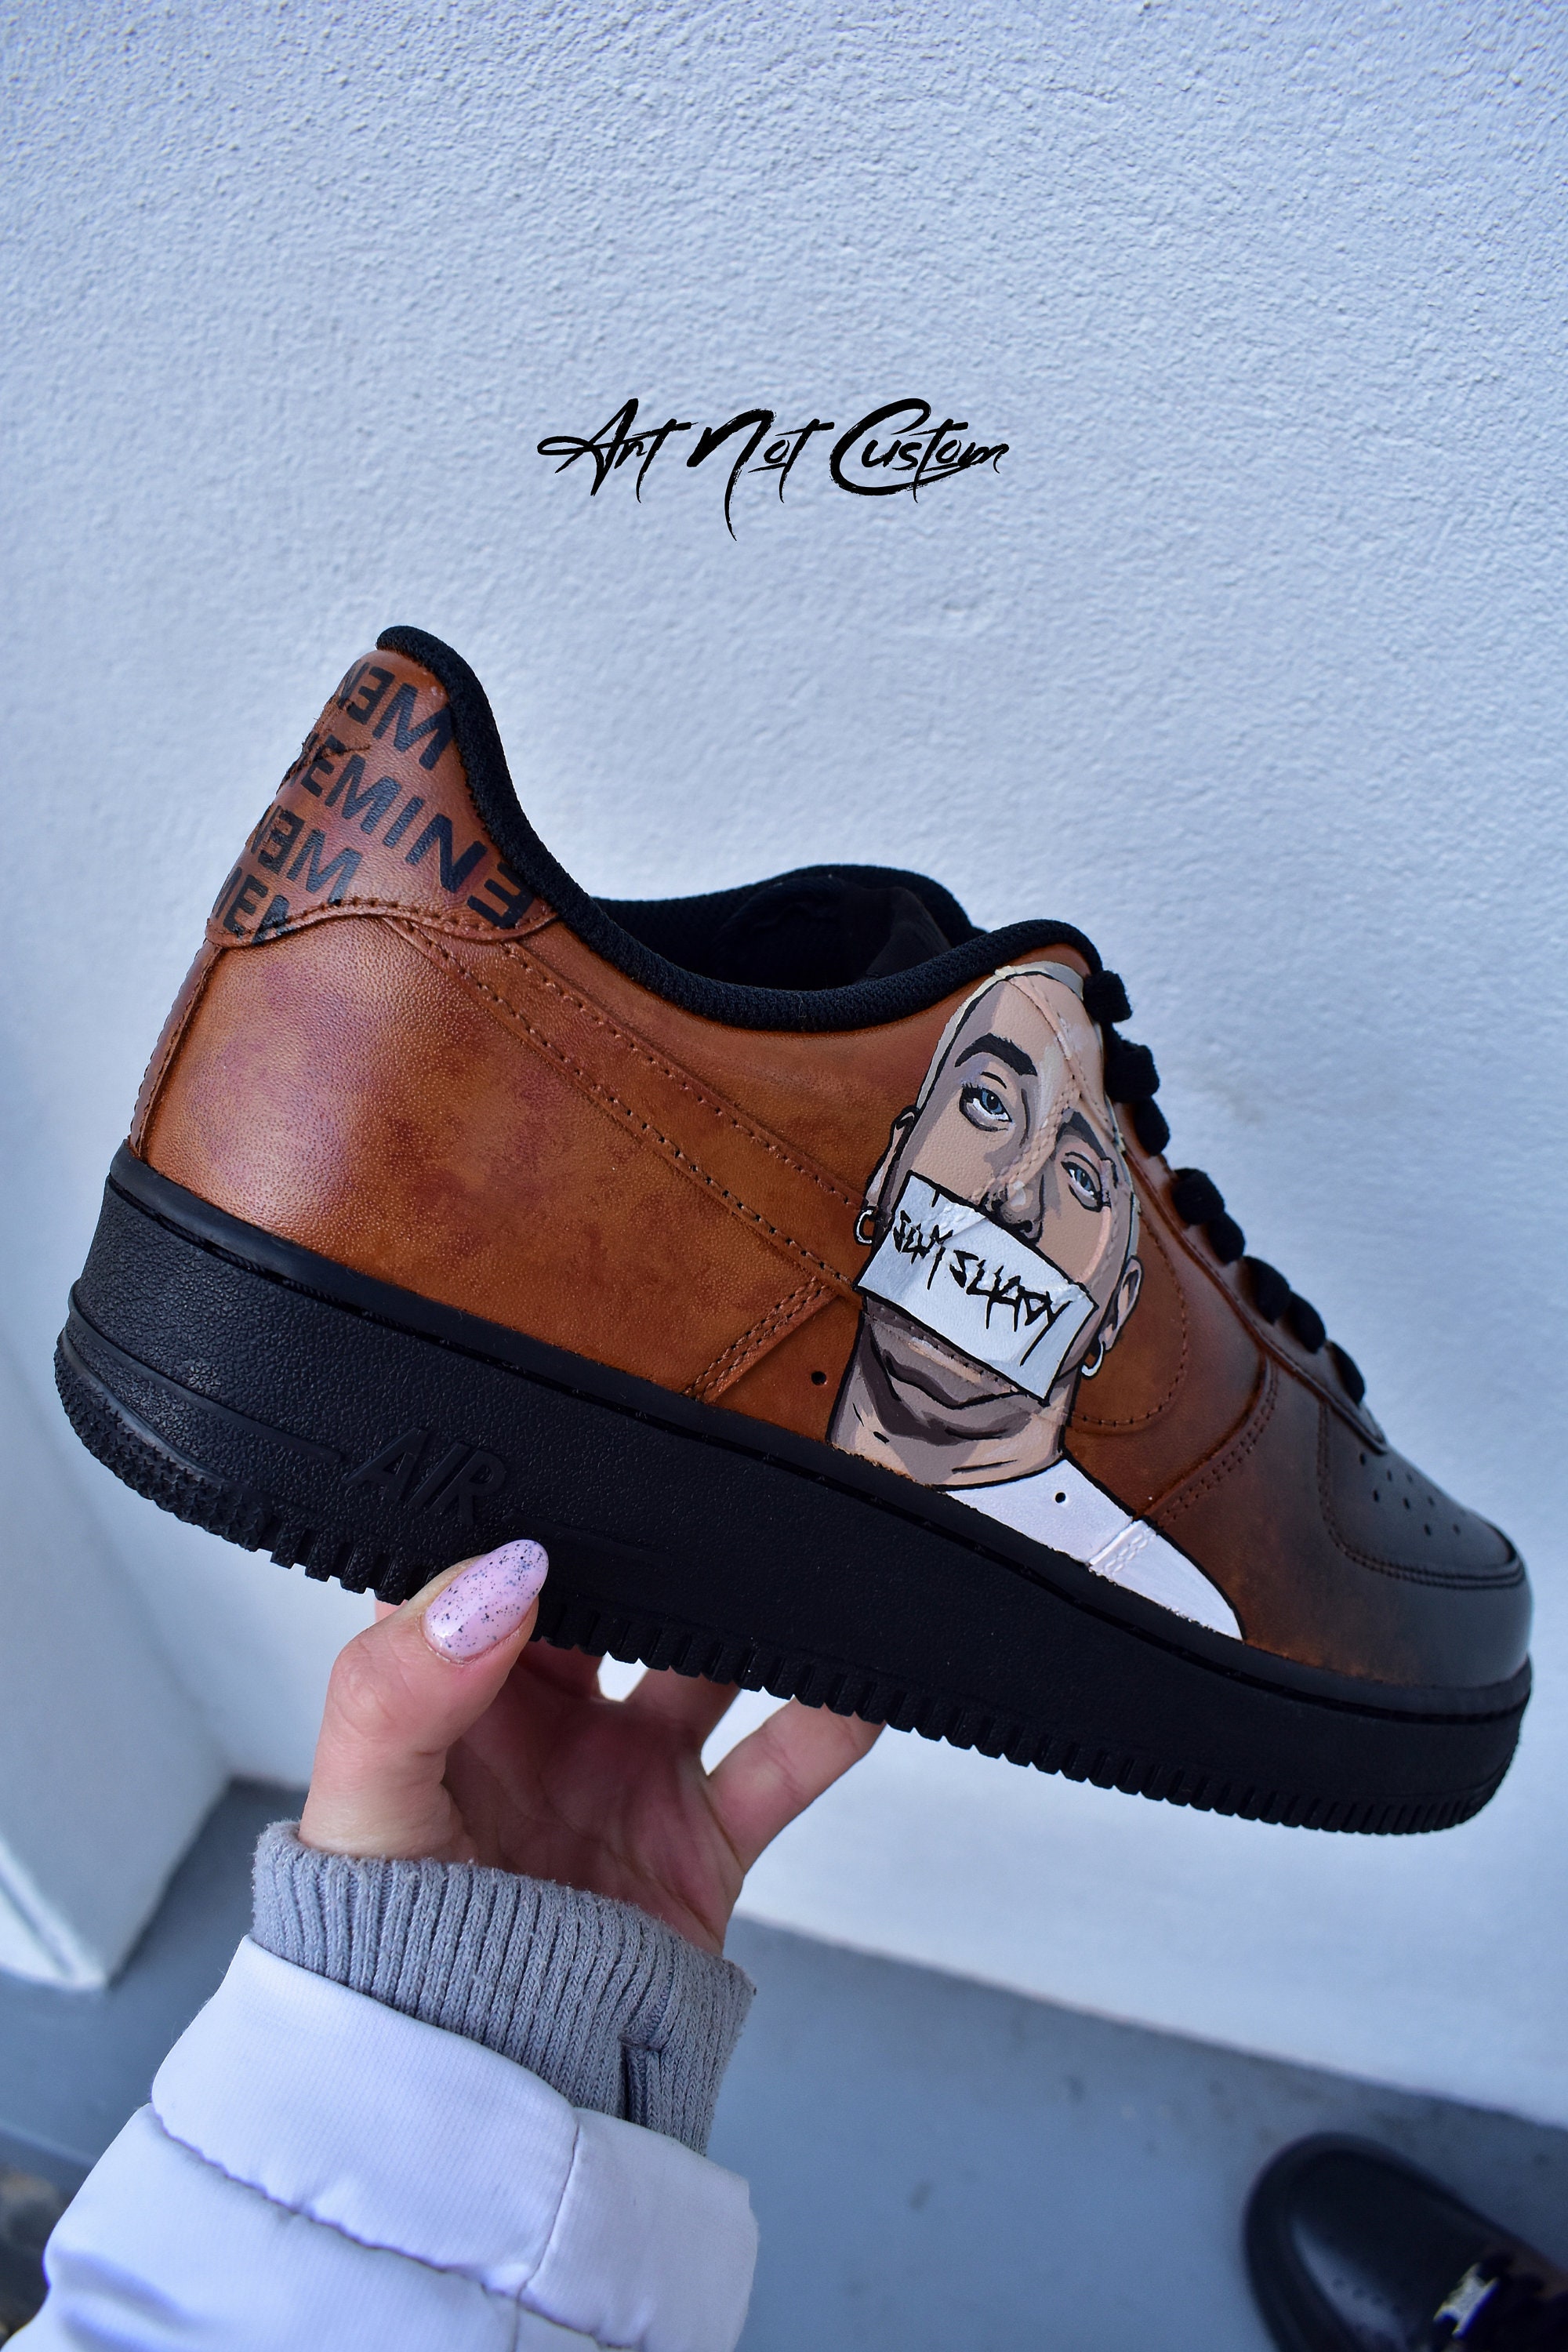 Eminem Air Force 1 Custom  Swag shoes, Nike air shoes, Custom nike shoes